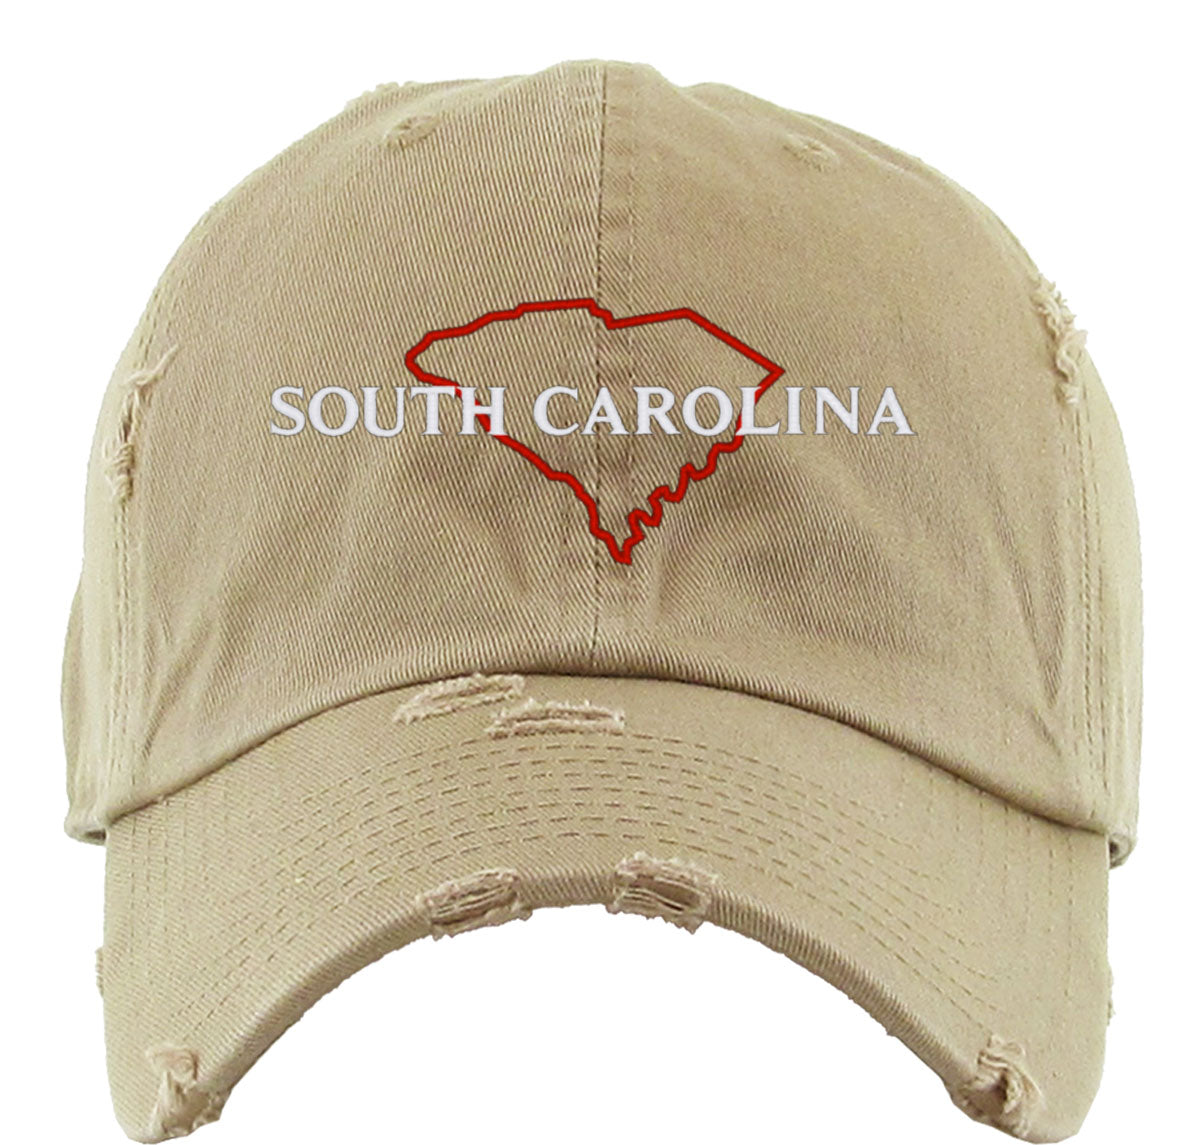 South Carolina Vintage Baseball Cap